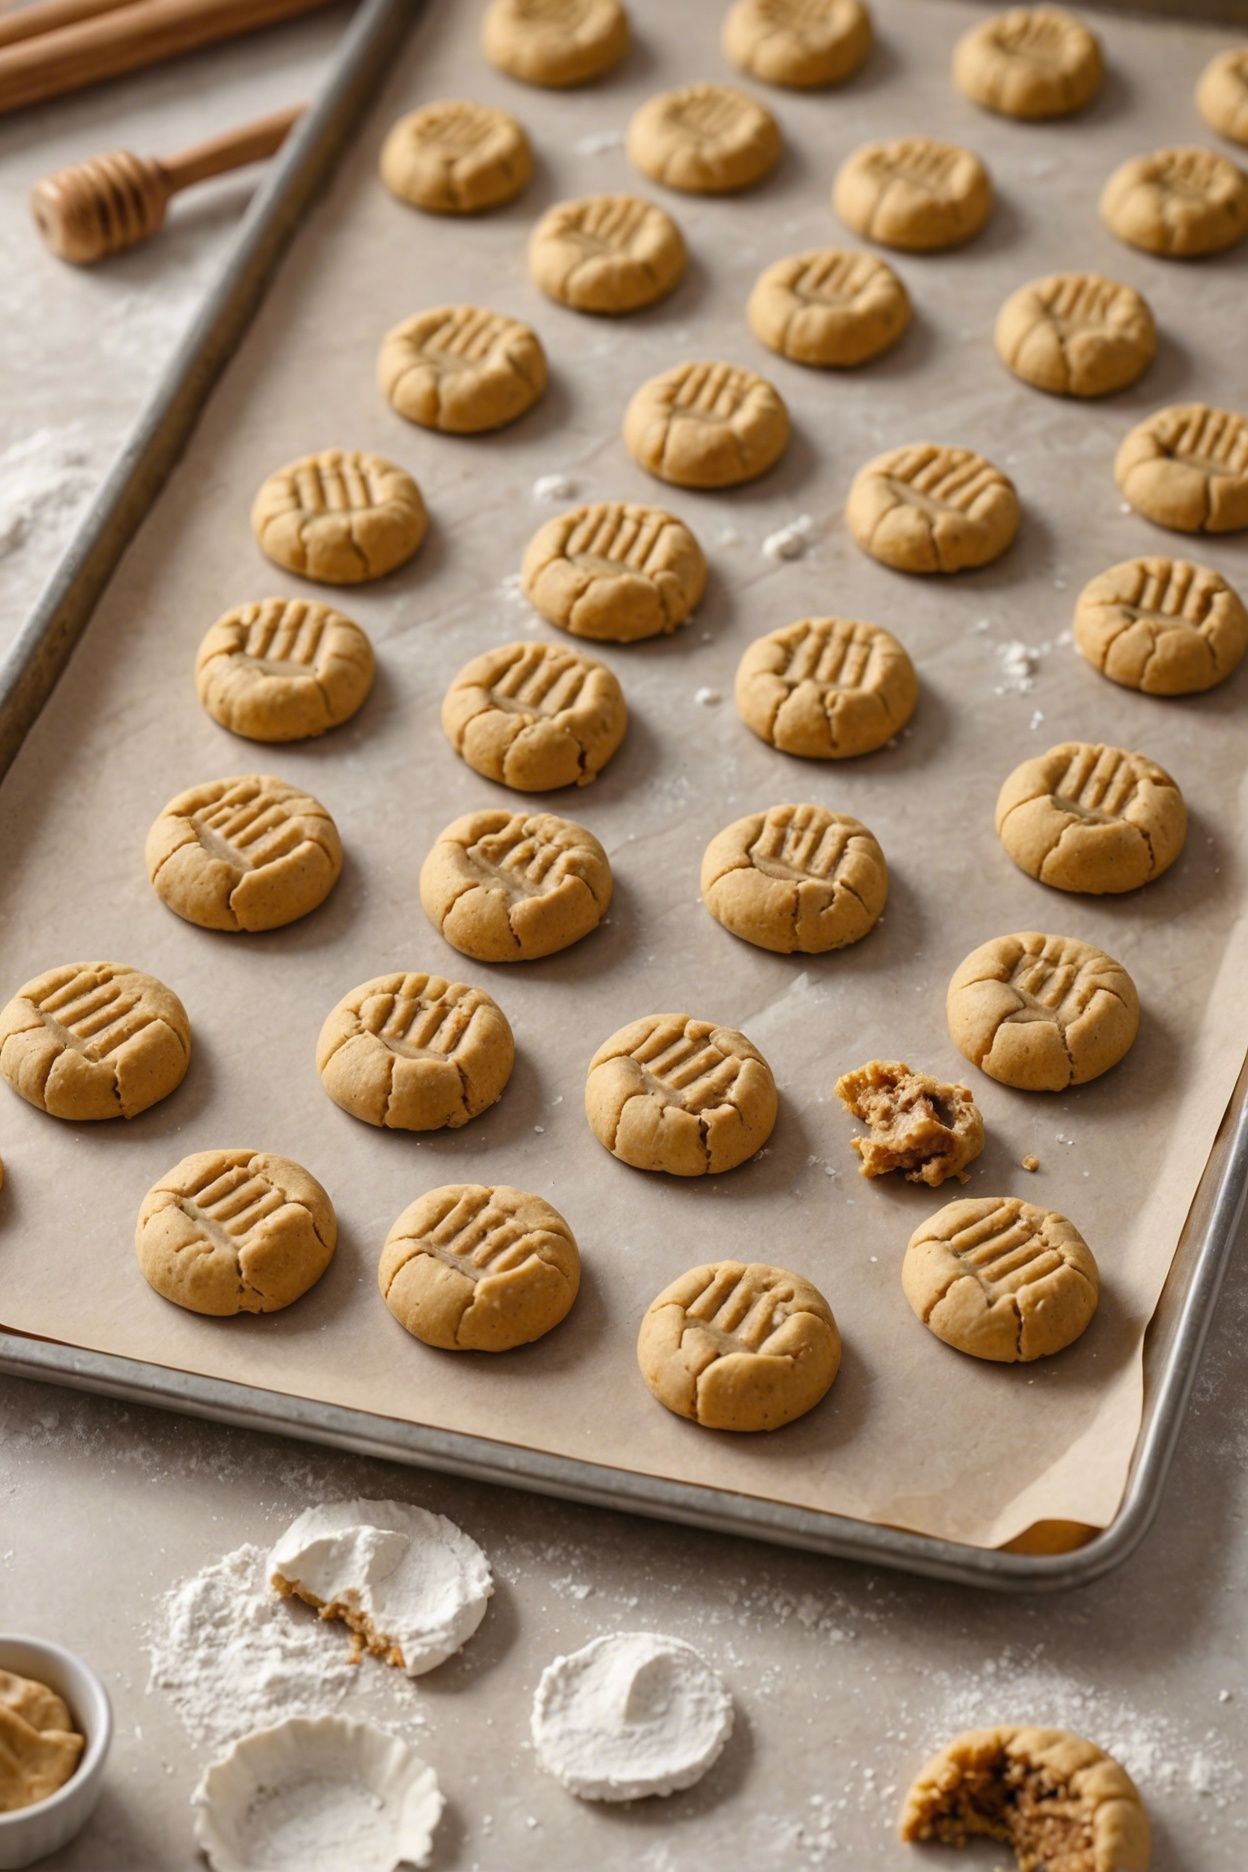 Grannys Filled Cookies